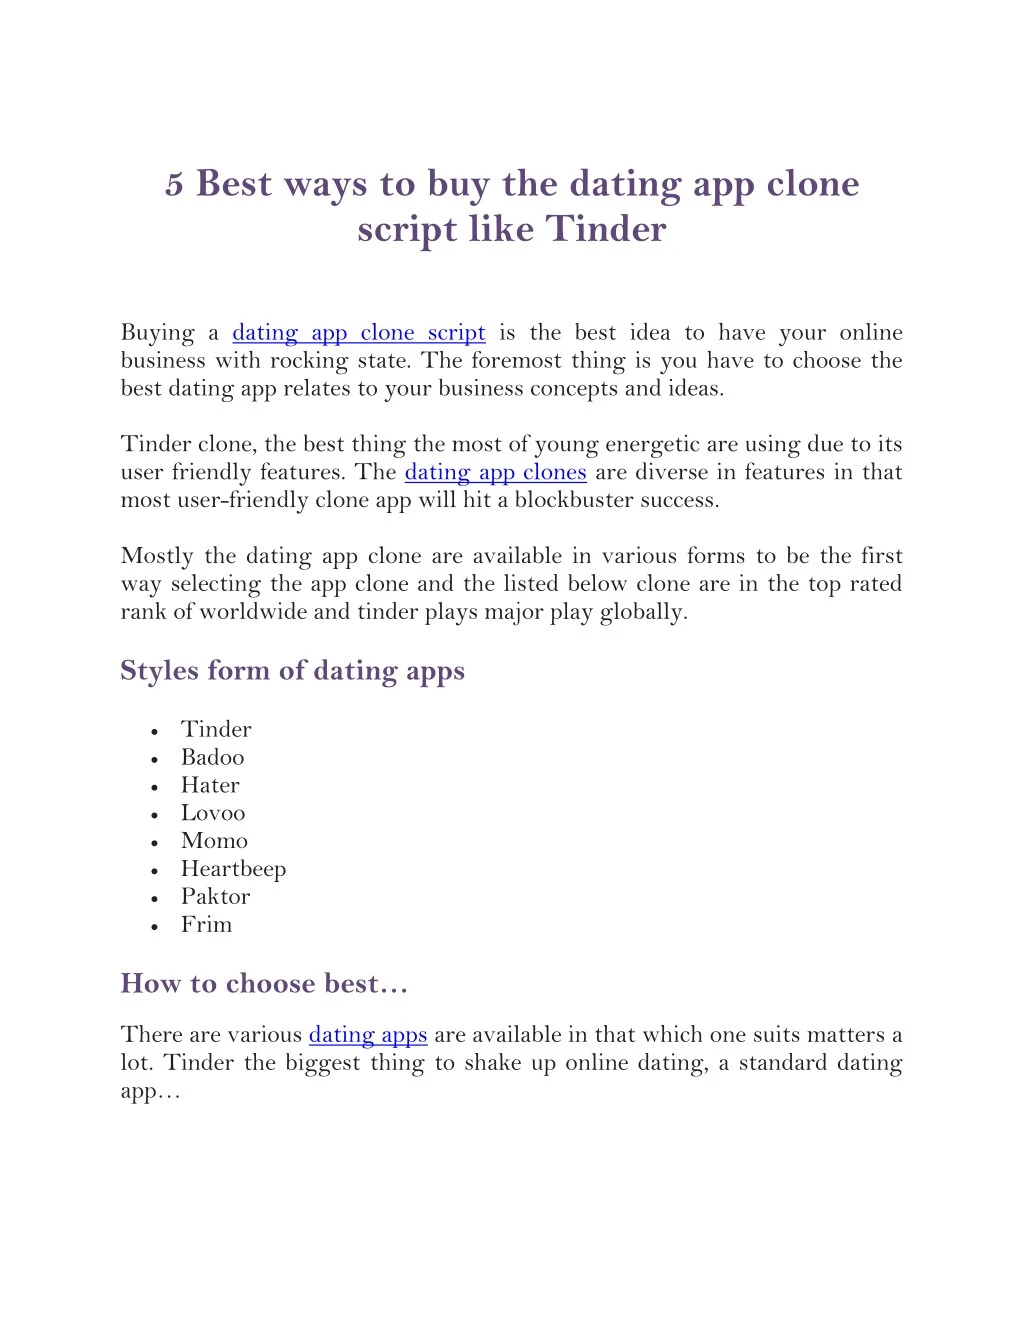 5 best ways to buy the dating app clone script